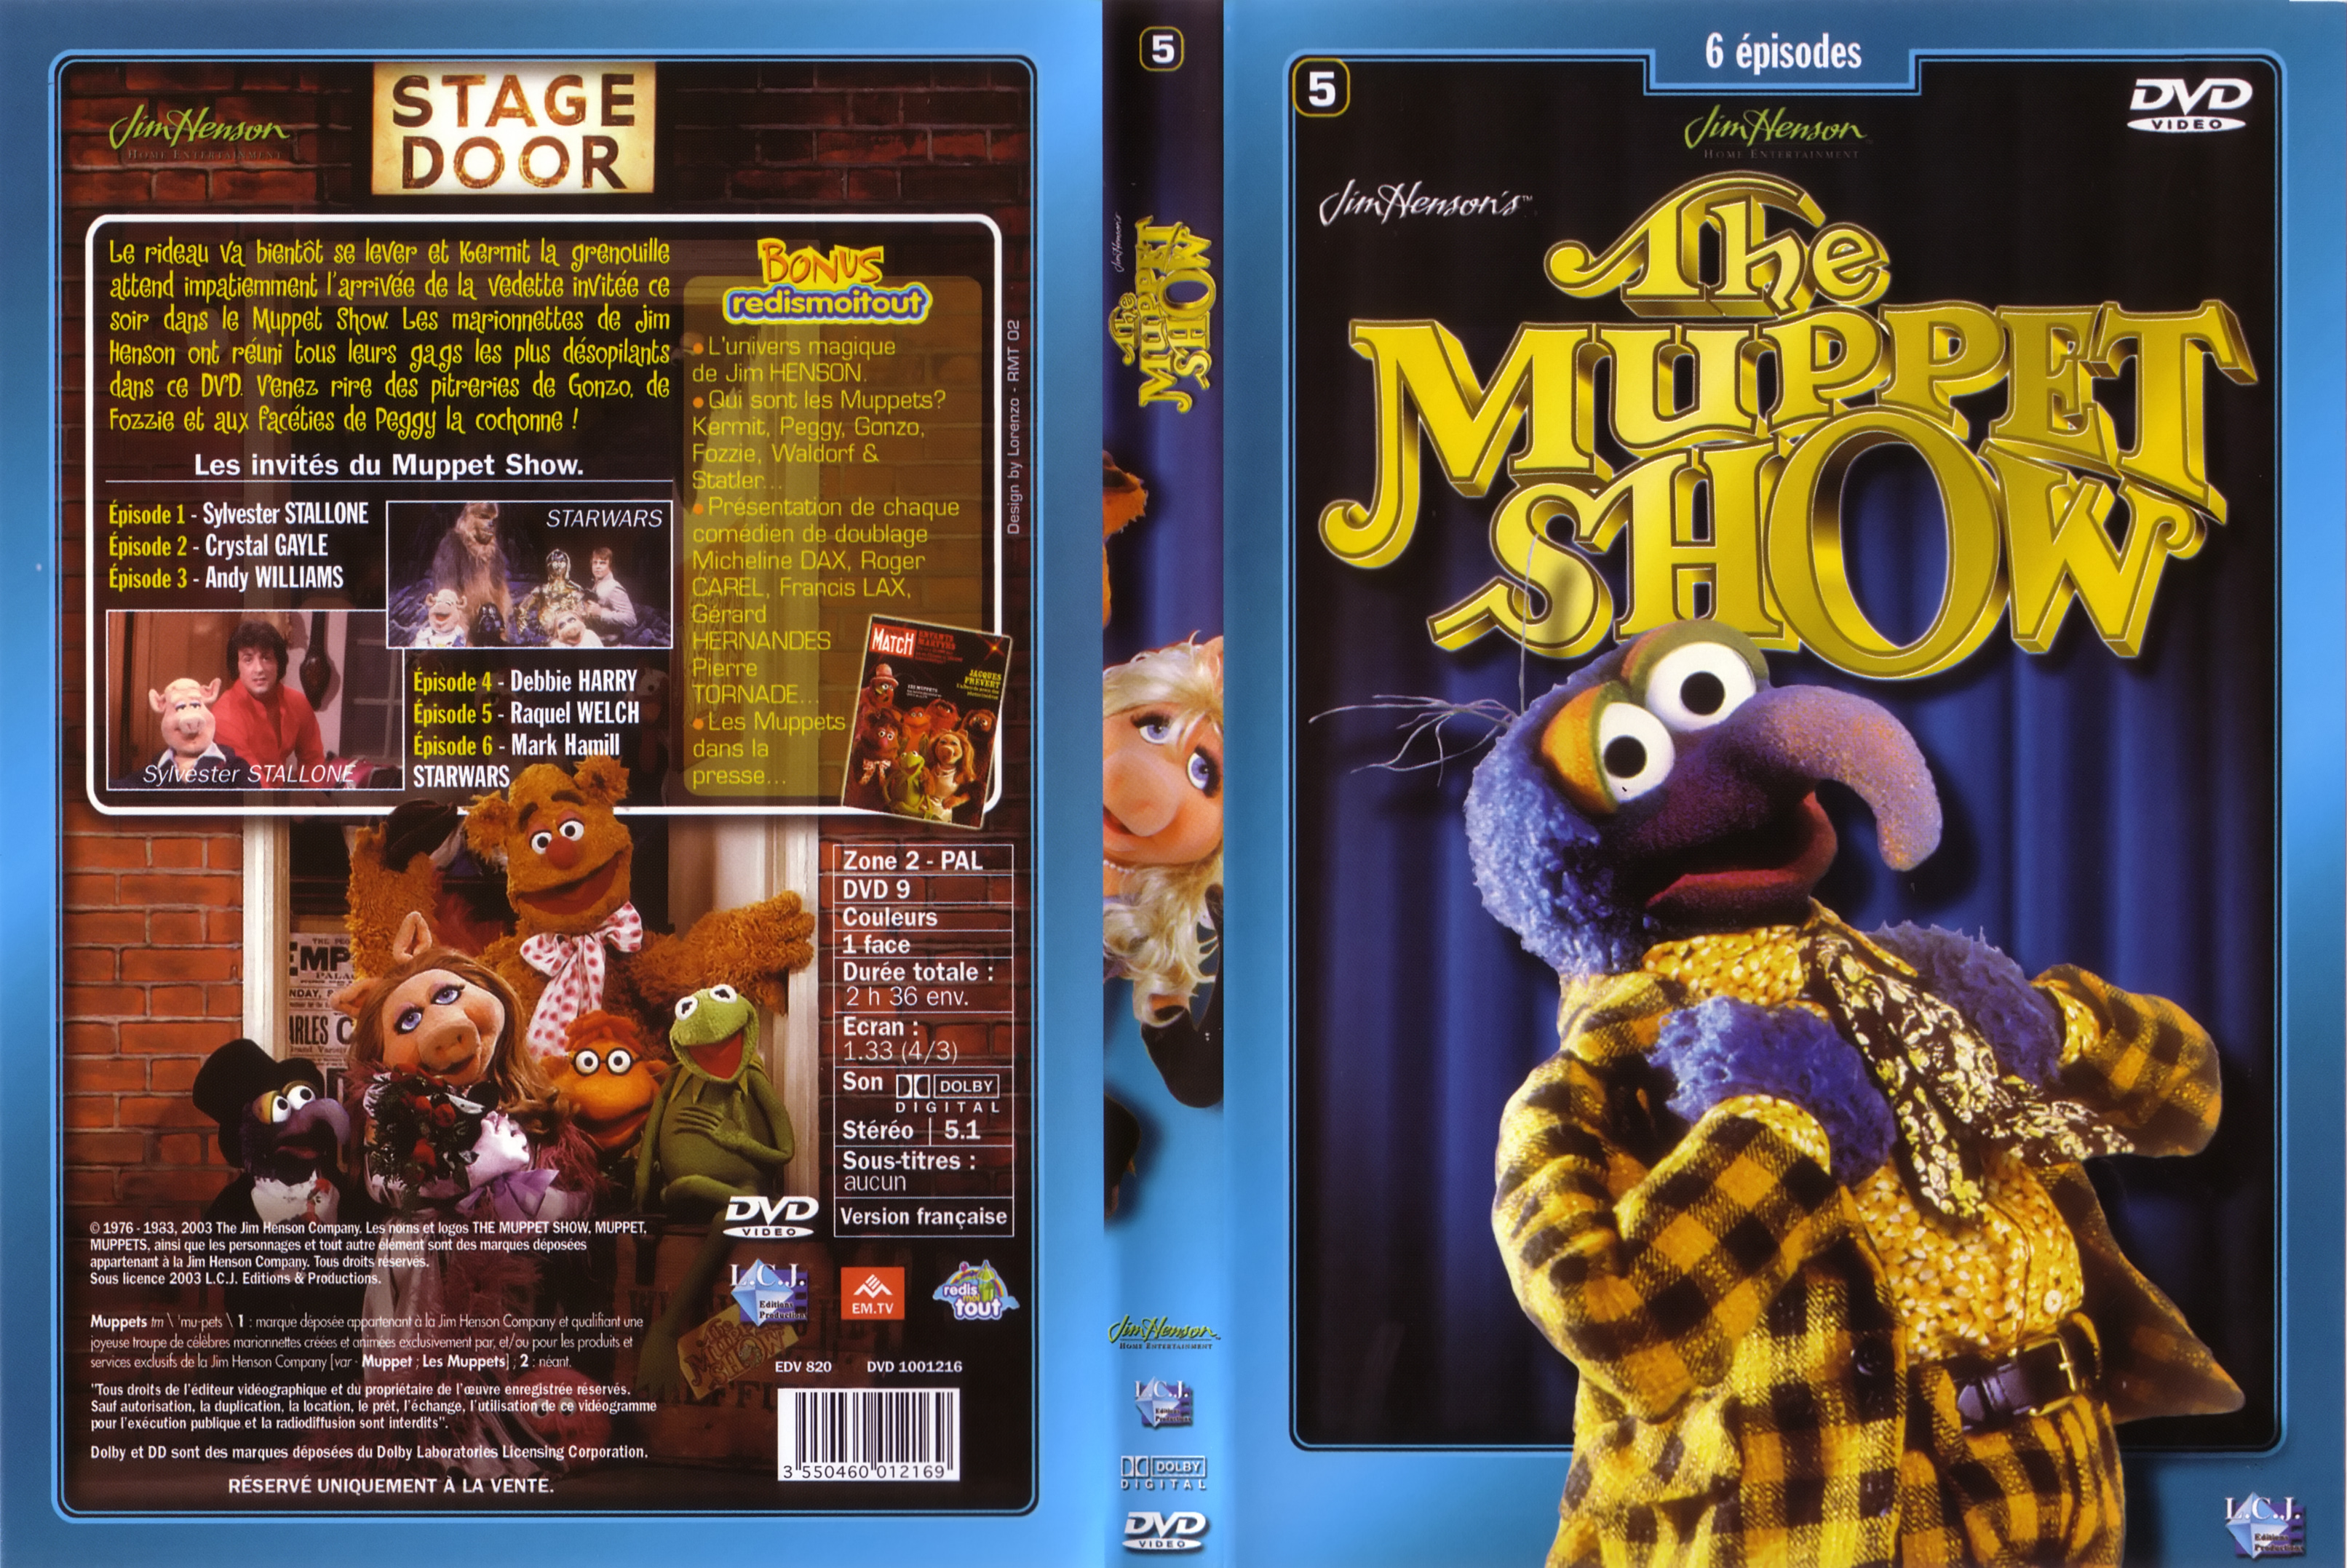 Jaquette DVD The muppet show vol 2 DVD 5